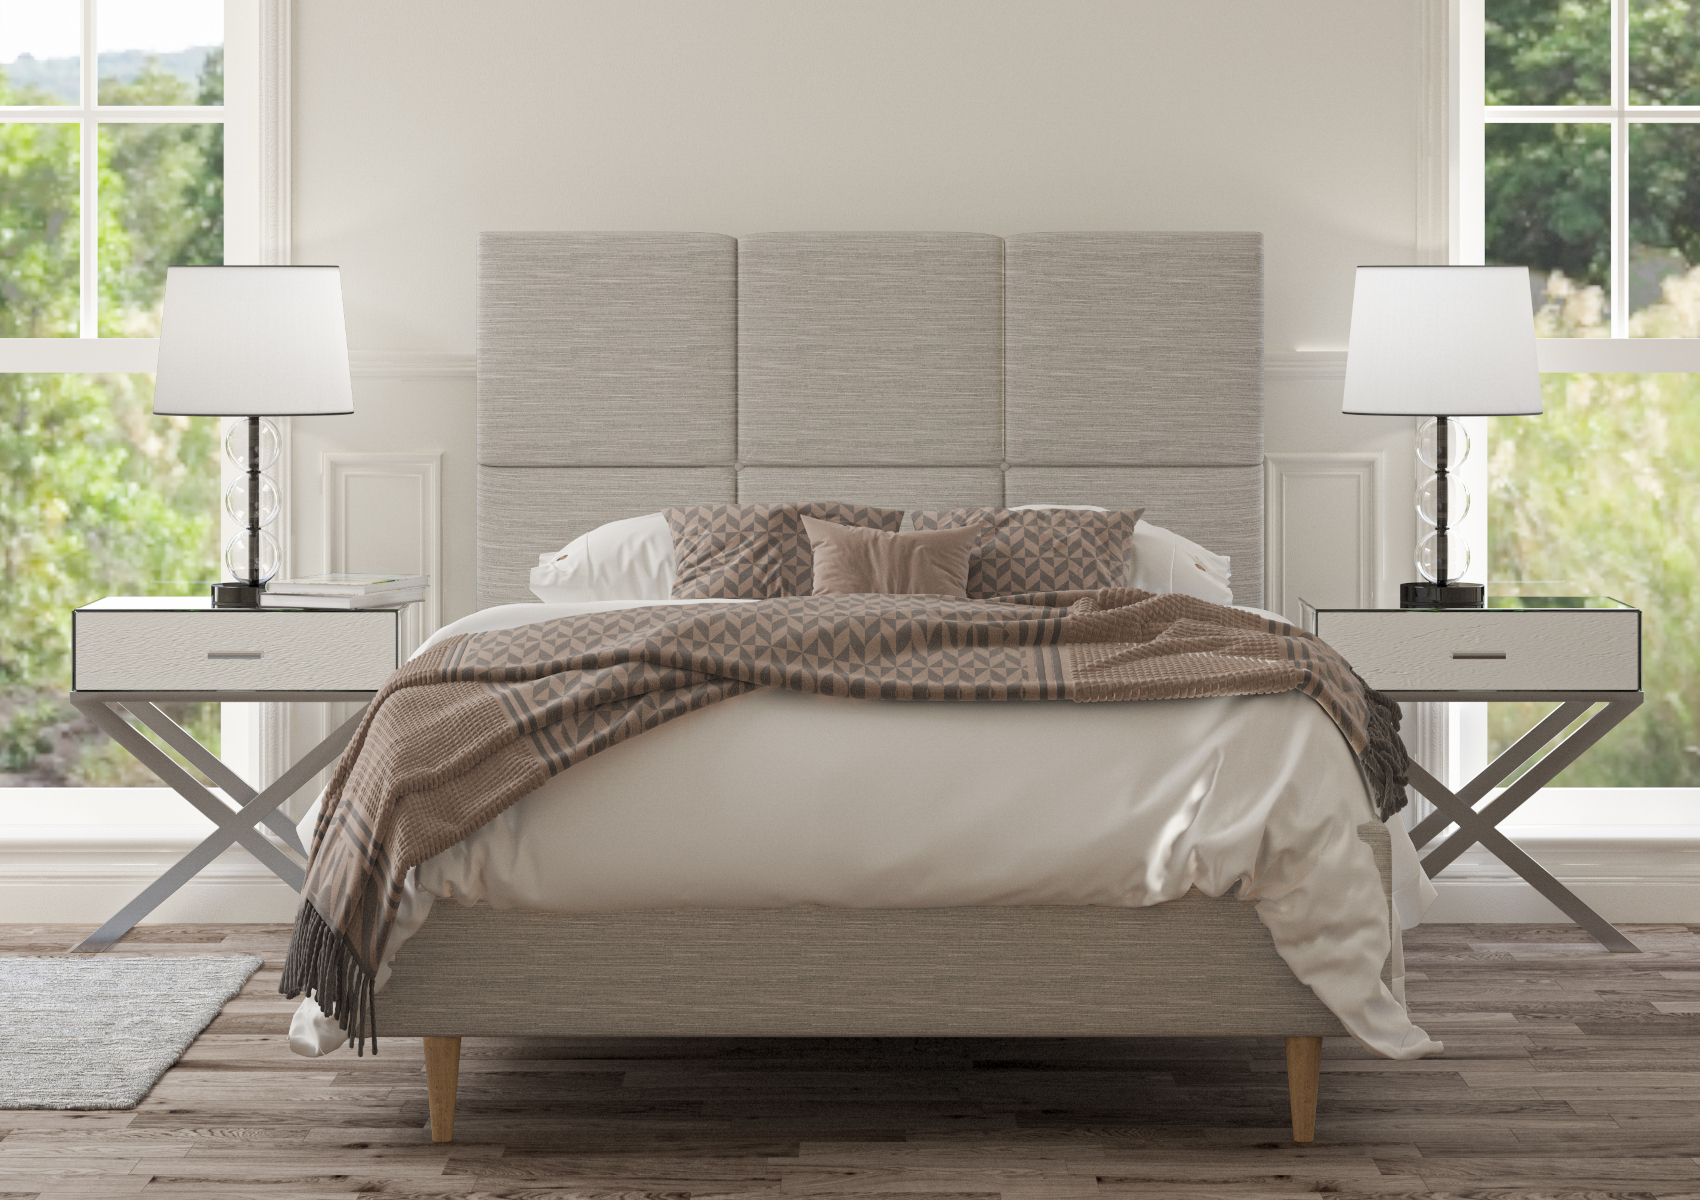 View Lauren Linea Fog Upholstered King Size Bed Time4Sleep information